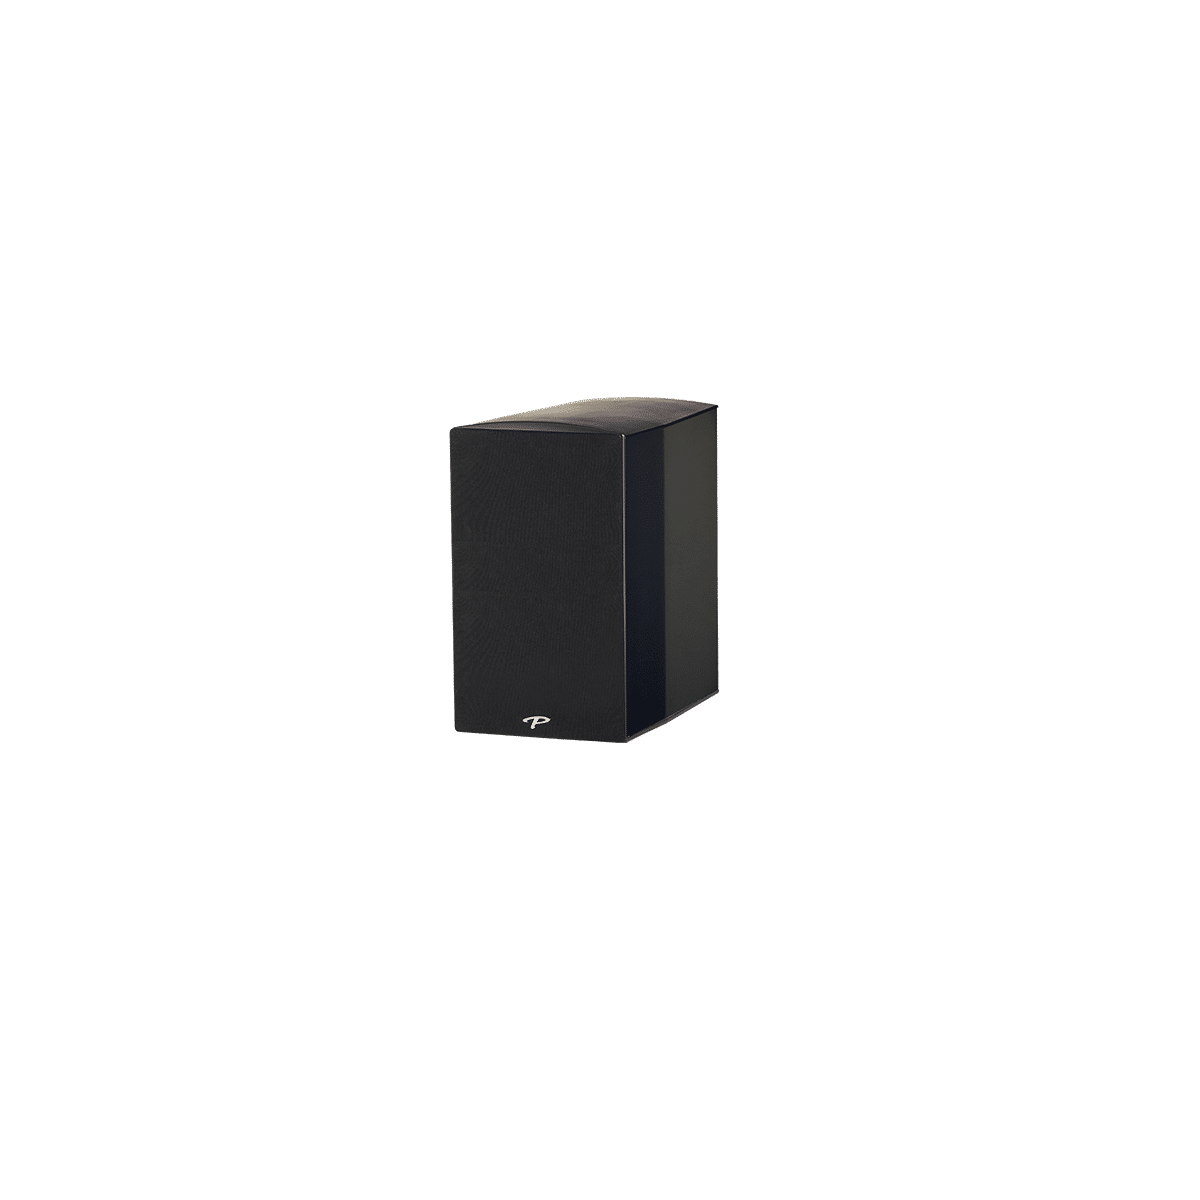 Paradigm Premier 200b Bookshelf Speakers black with grill side view